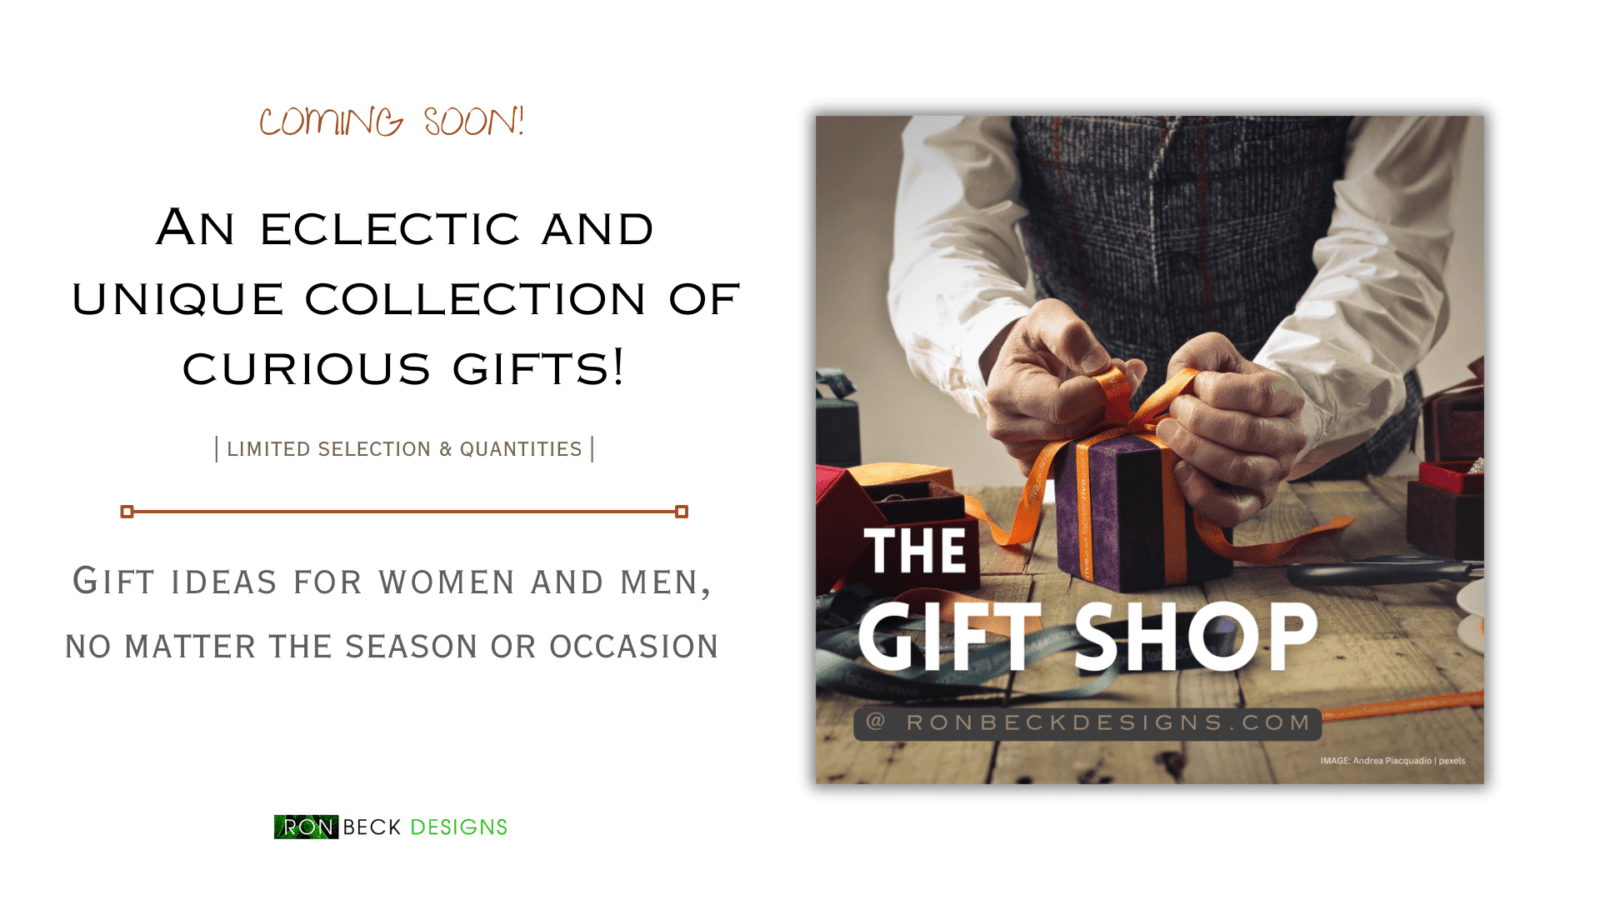 The Gift Shop | Ron Beck Designs @ronbeckdesigns 1920 1080